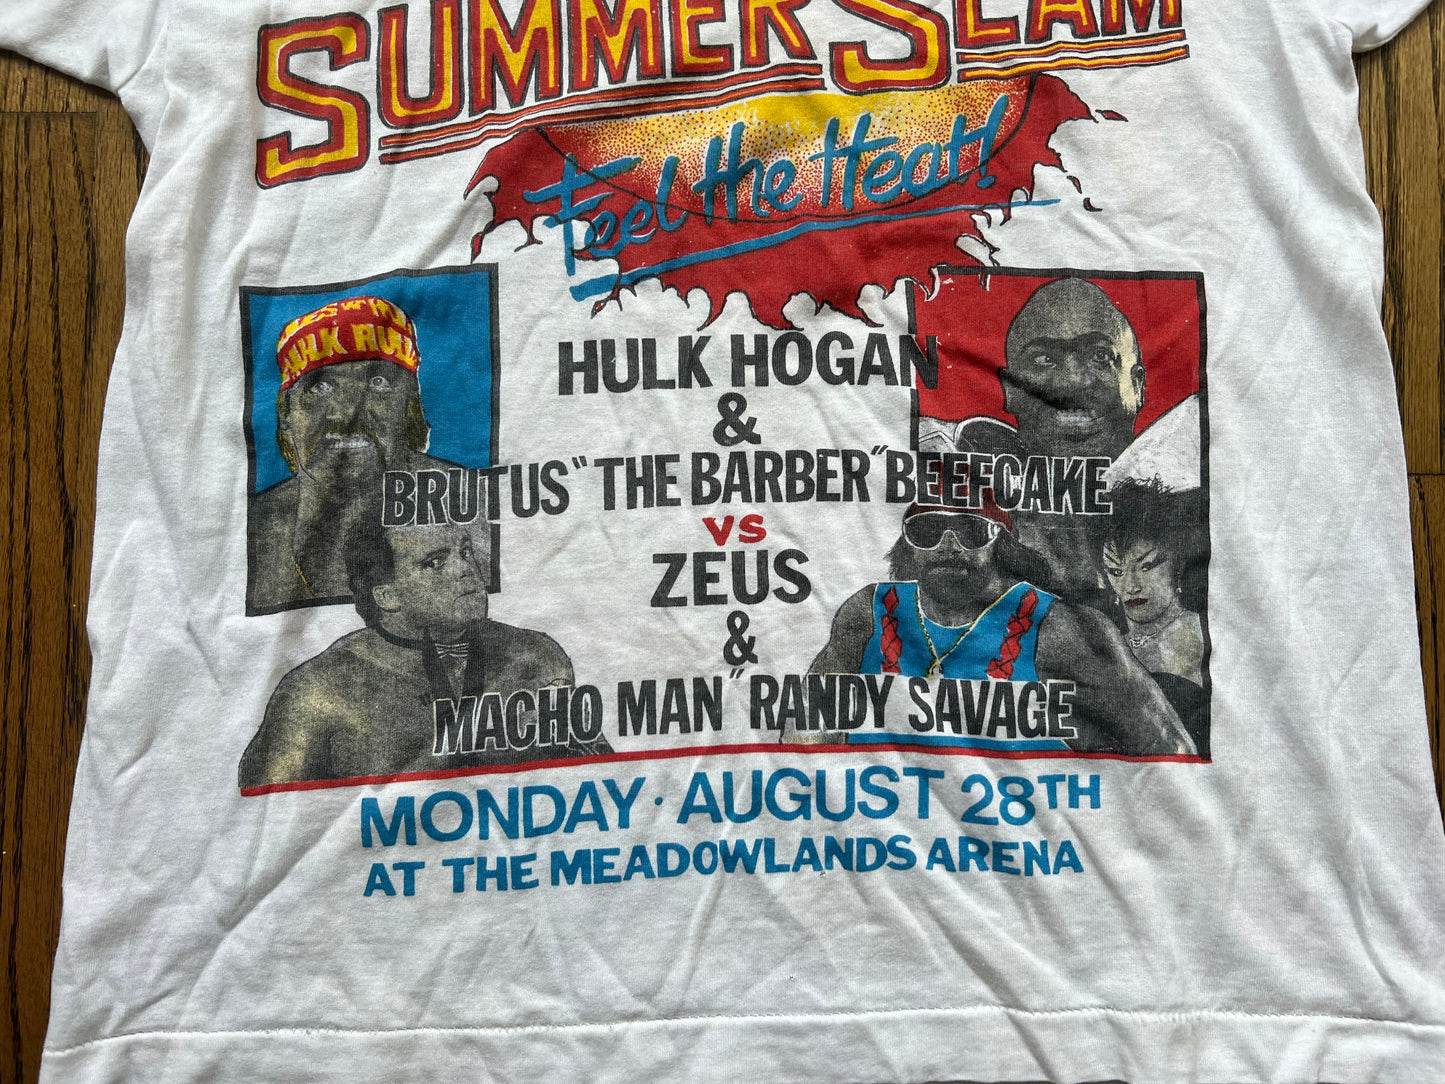 1989 WWF SummerSlam “Feel the Heat!” Parking lot bootleg event shirt featuring “Macho Man” Randy Savage, “The Human Wrecking Machine” Zeus, The “Sensational Queen” Sherri, Hulk Hogan and Brutus “The Barber” Beefcake